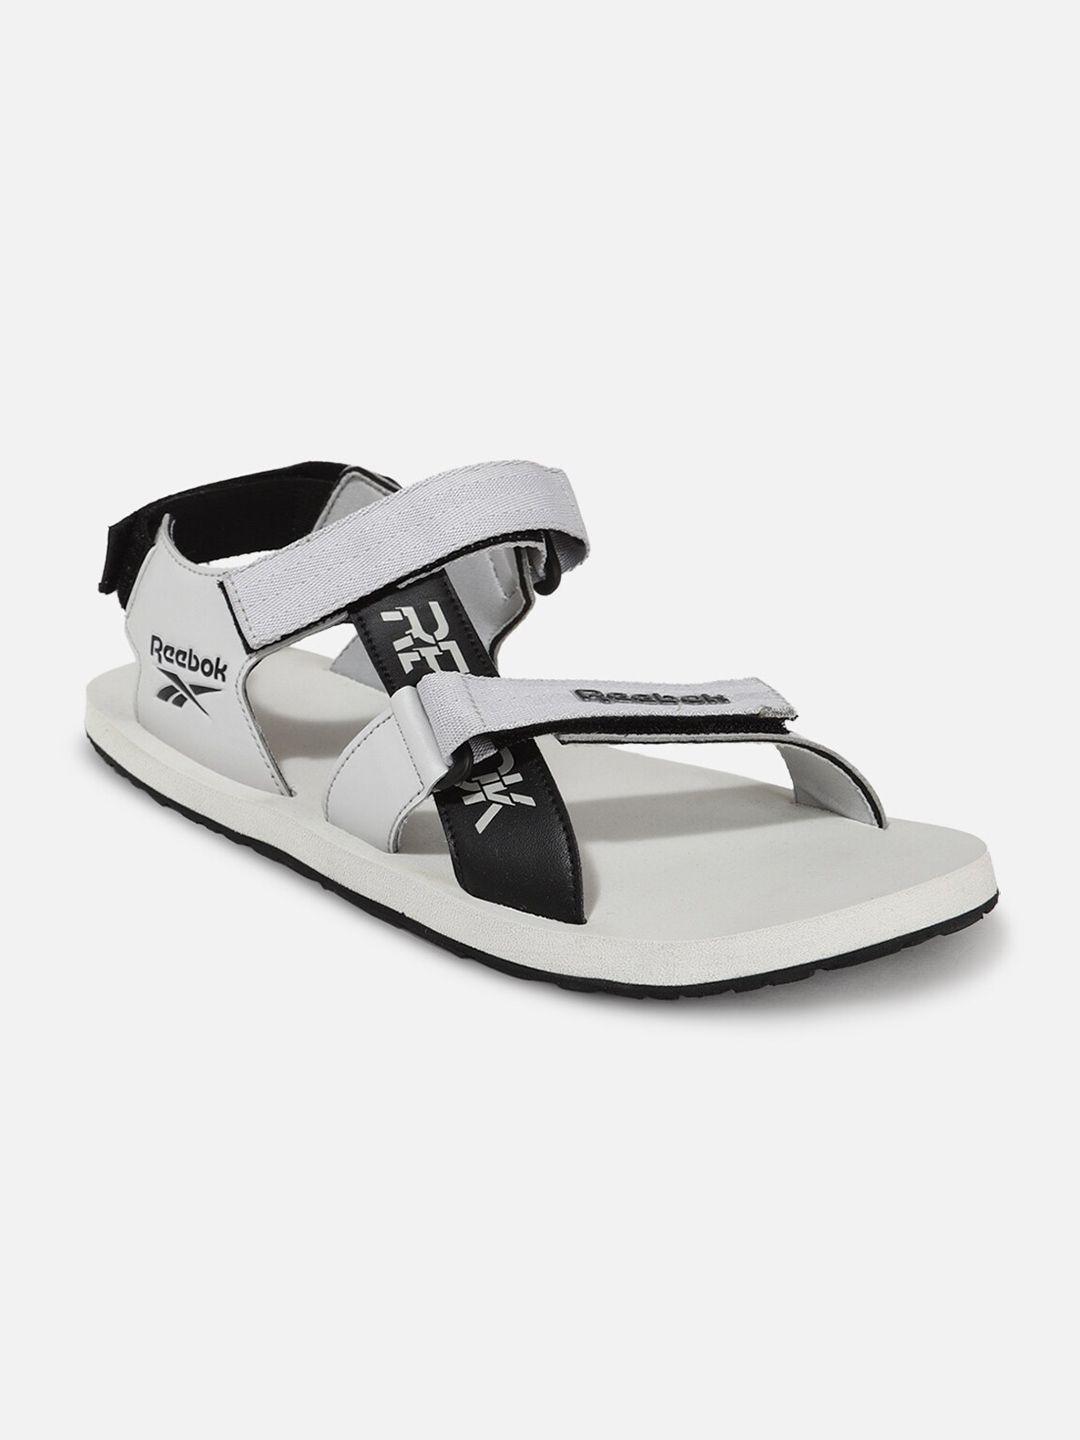 reebok-men-axel-brand-logo-printed-sport-sandals